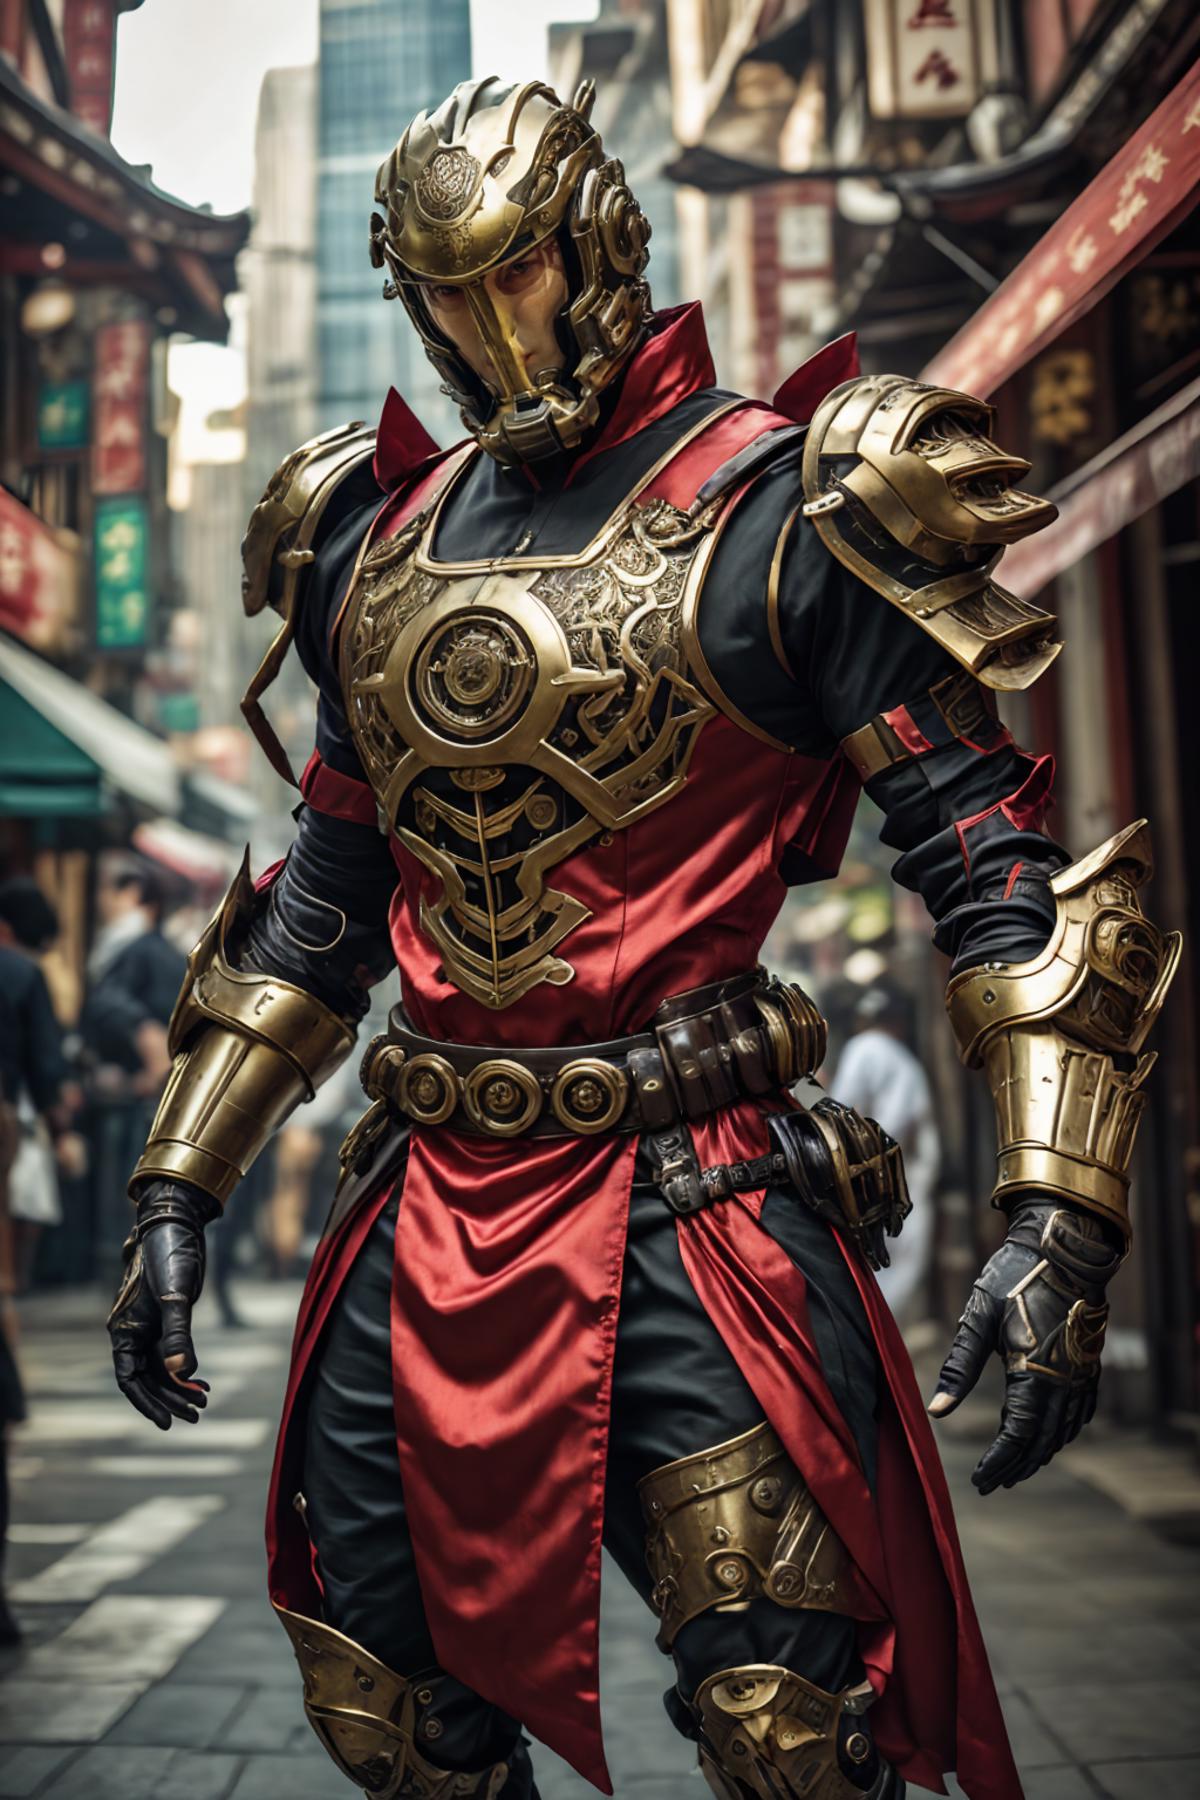 SilkPunk Armor image by Kairen92